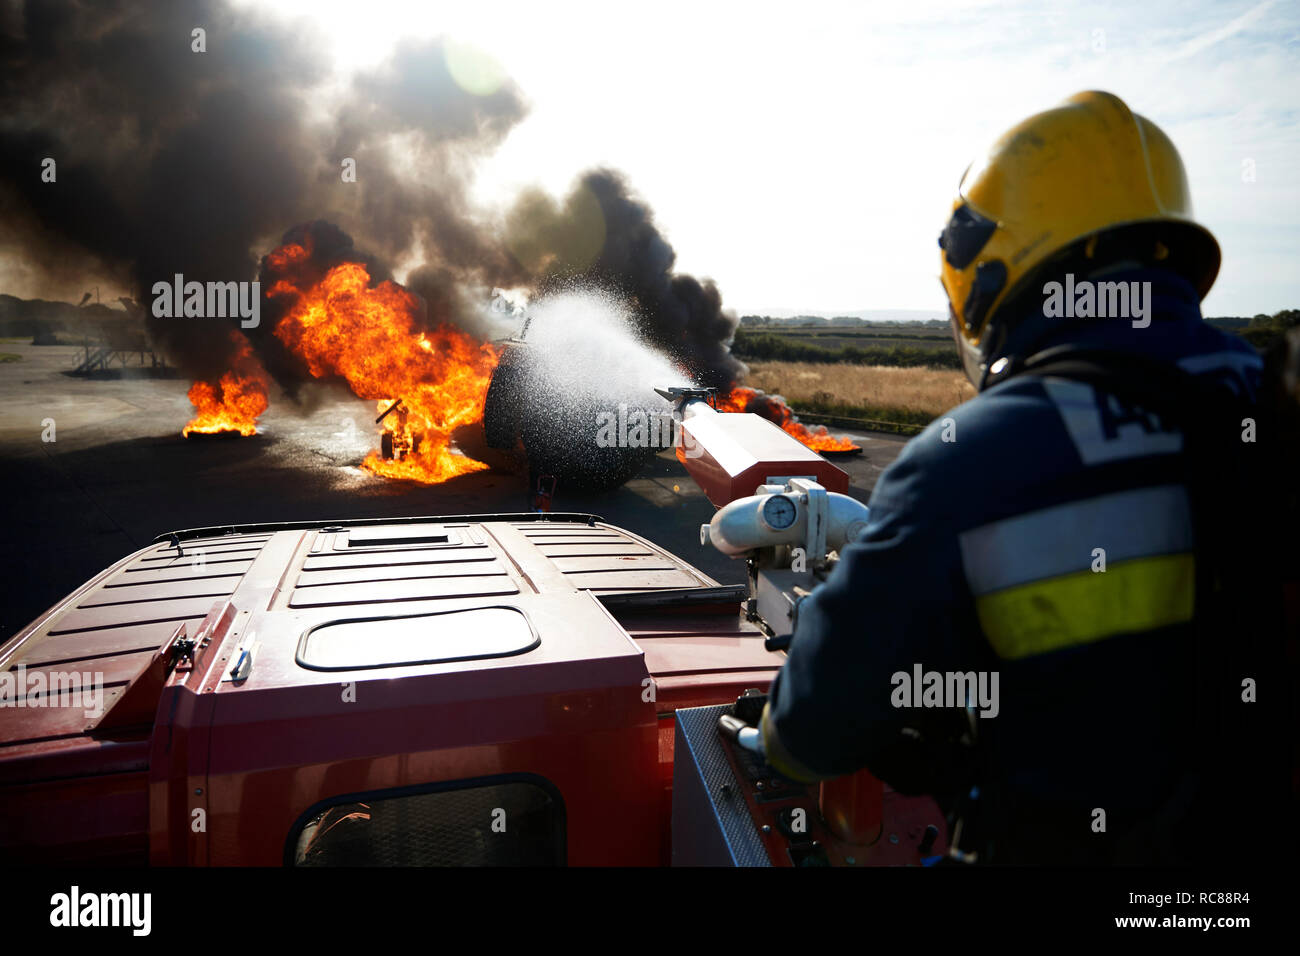 Fireman putting out fire on old training aeroplane, Darlington, UK Stock Photo